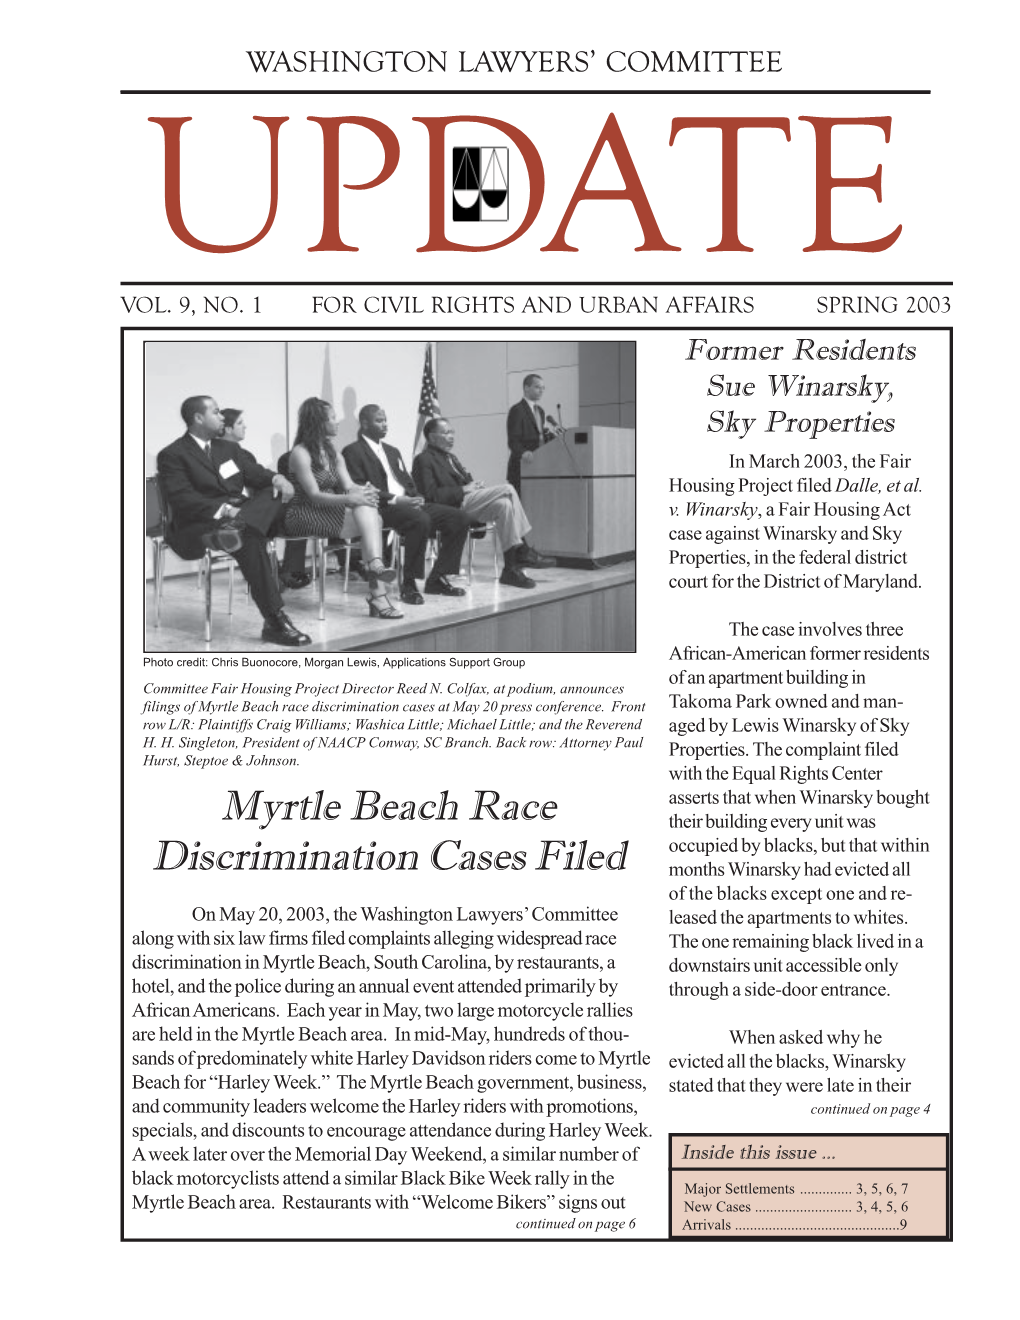 Myrtle Beach Race Discrimination Cases Filed